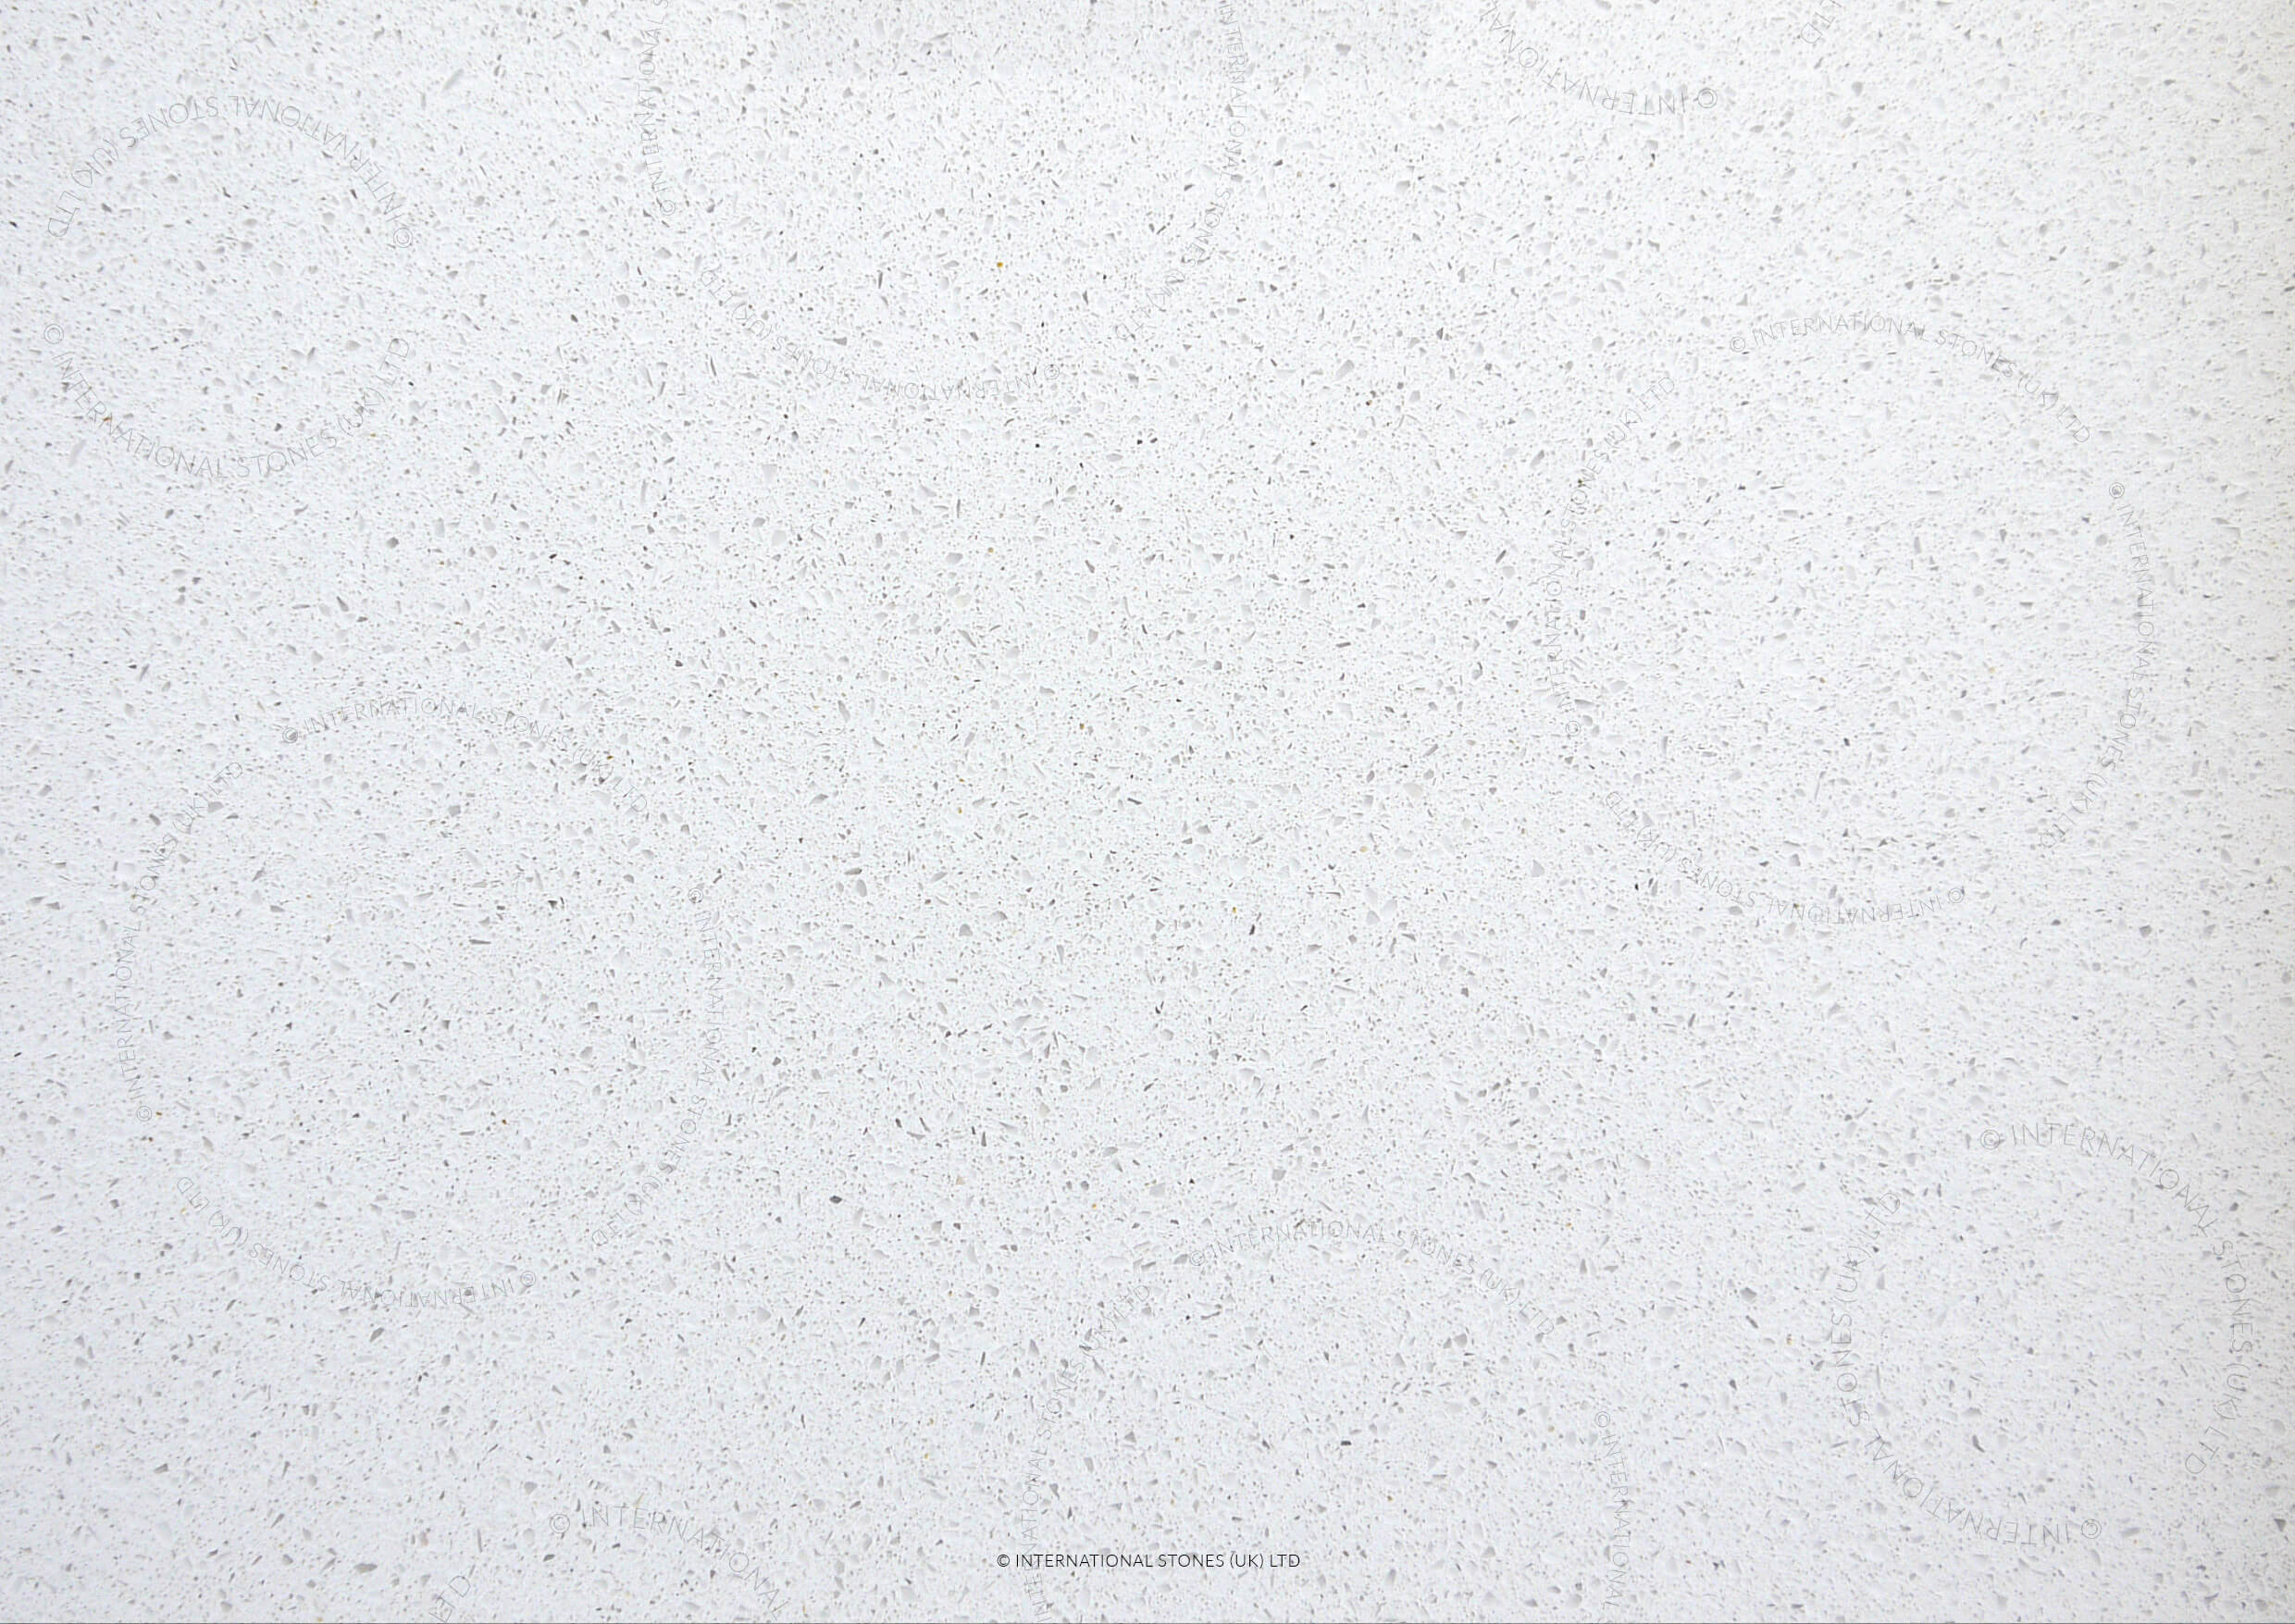 International Stone IQ Blanco Maple - London - Epsom
